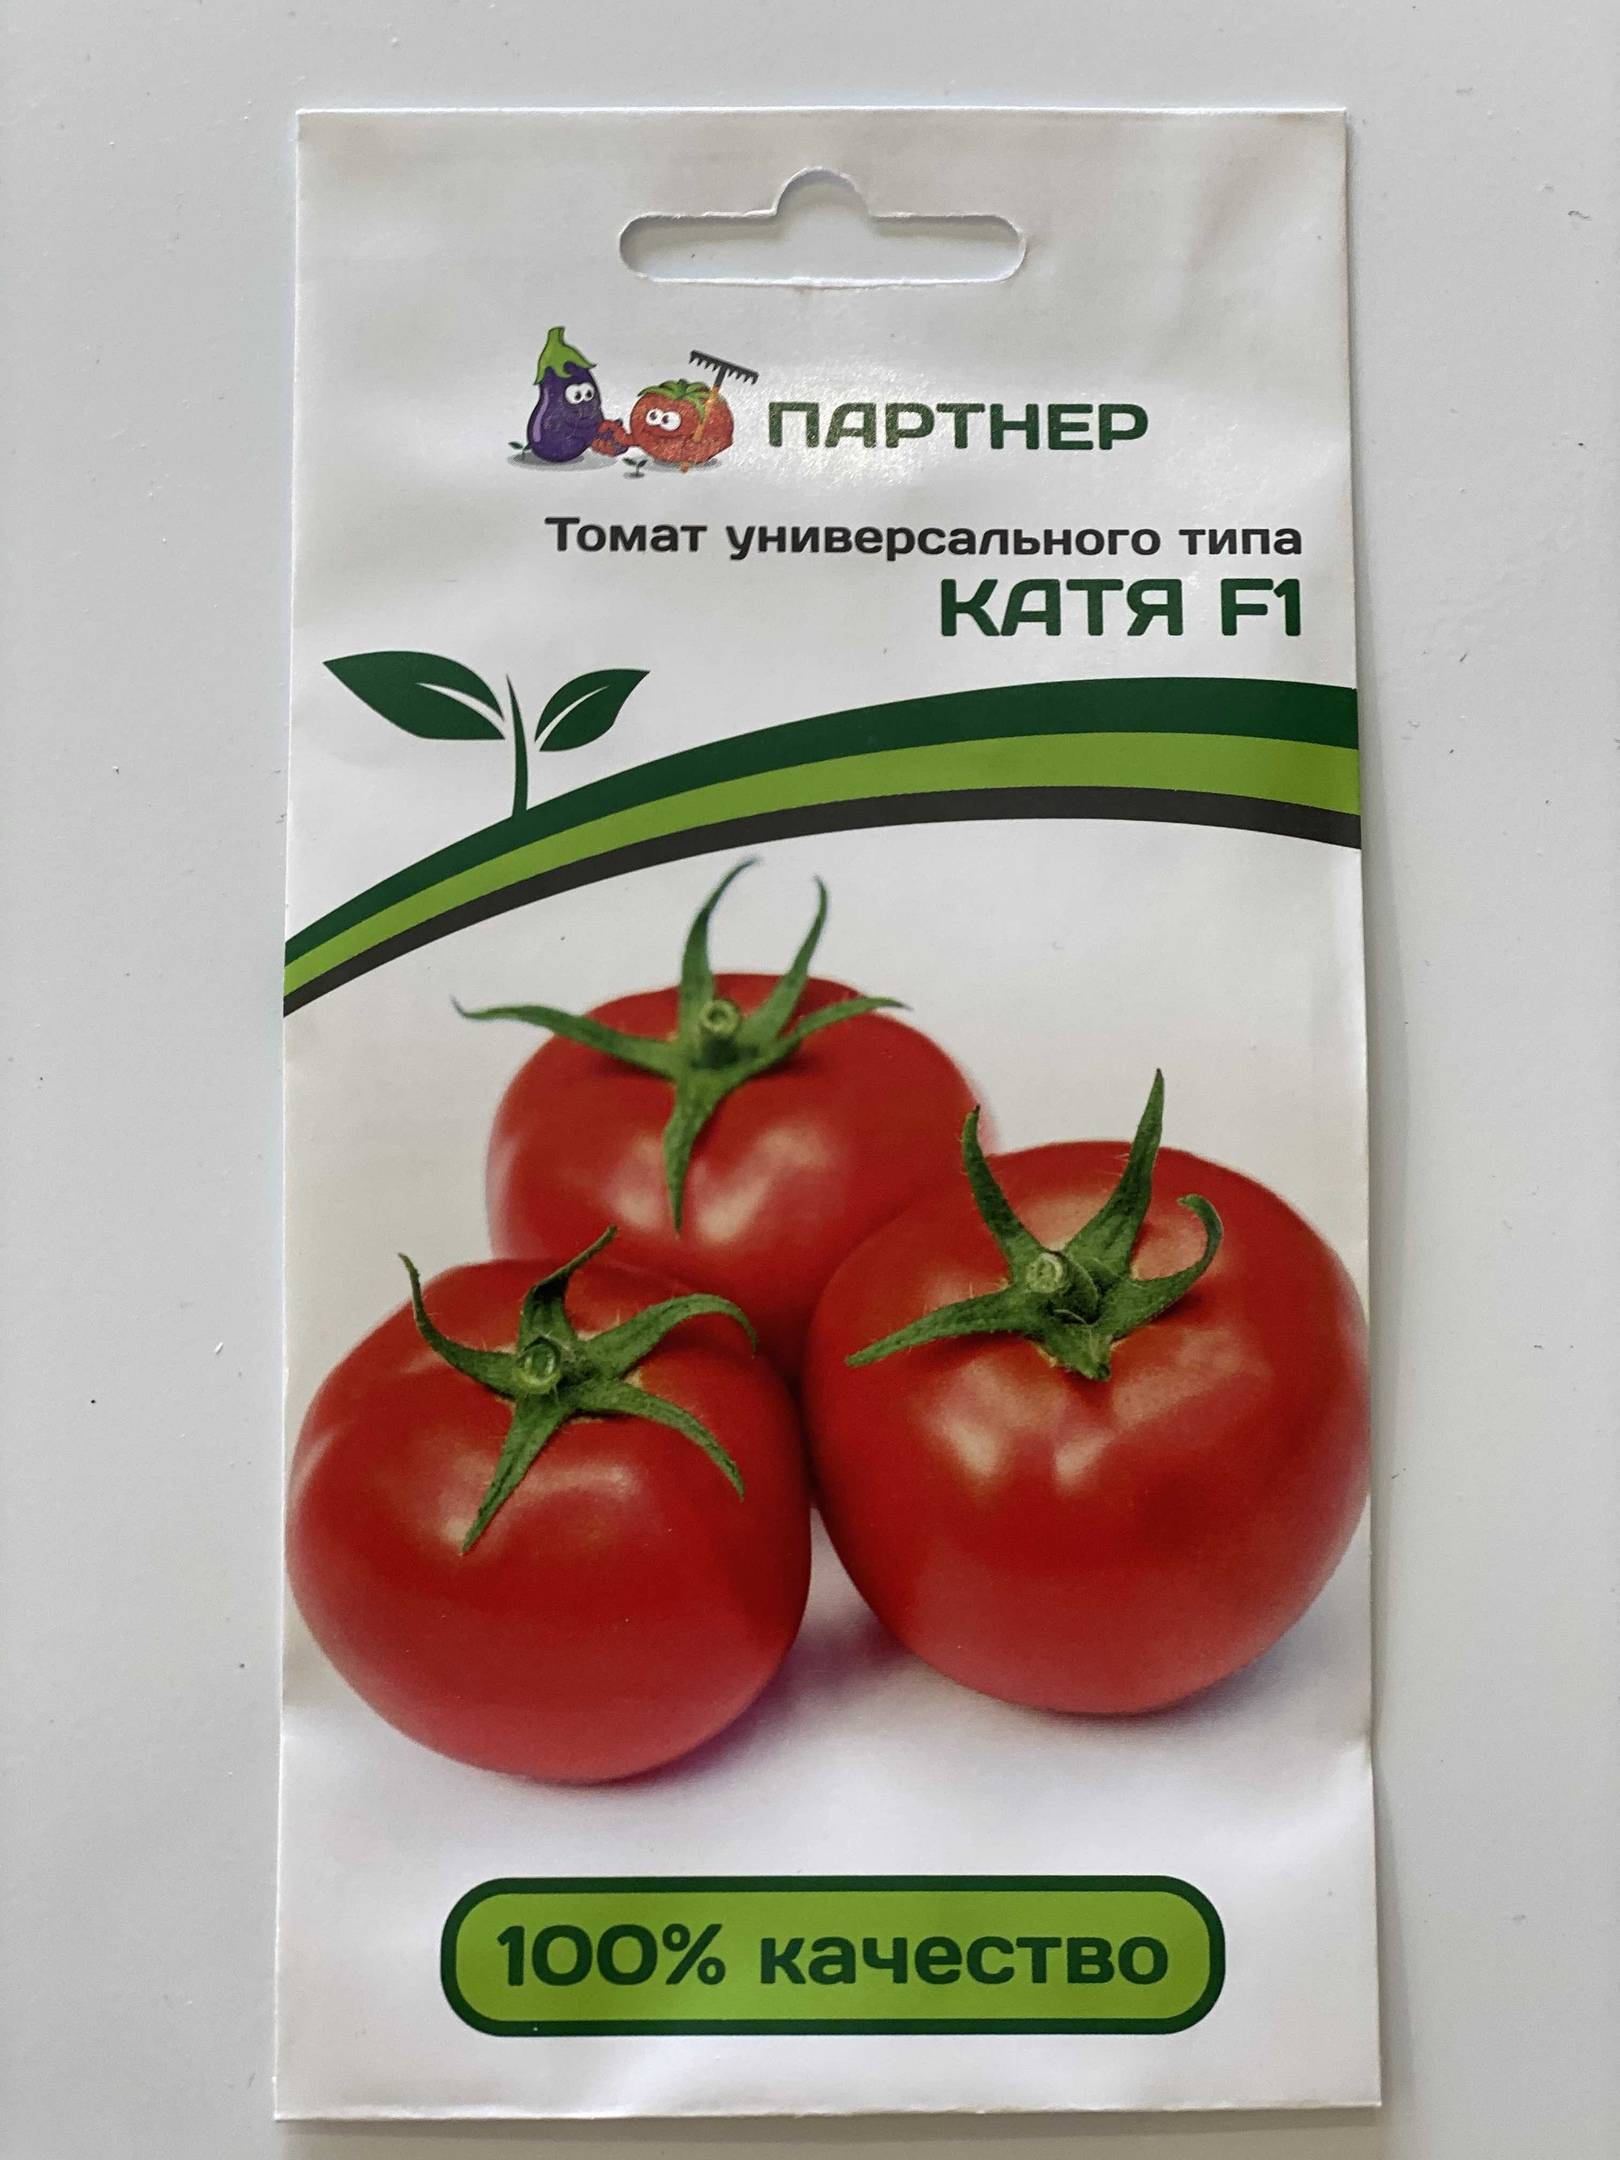 Характеристика и описание помидора “катя”, отзывы и фото